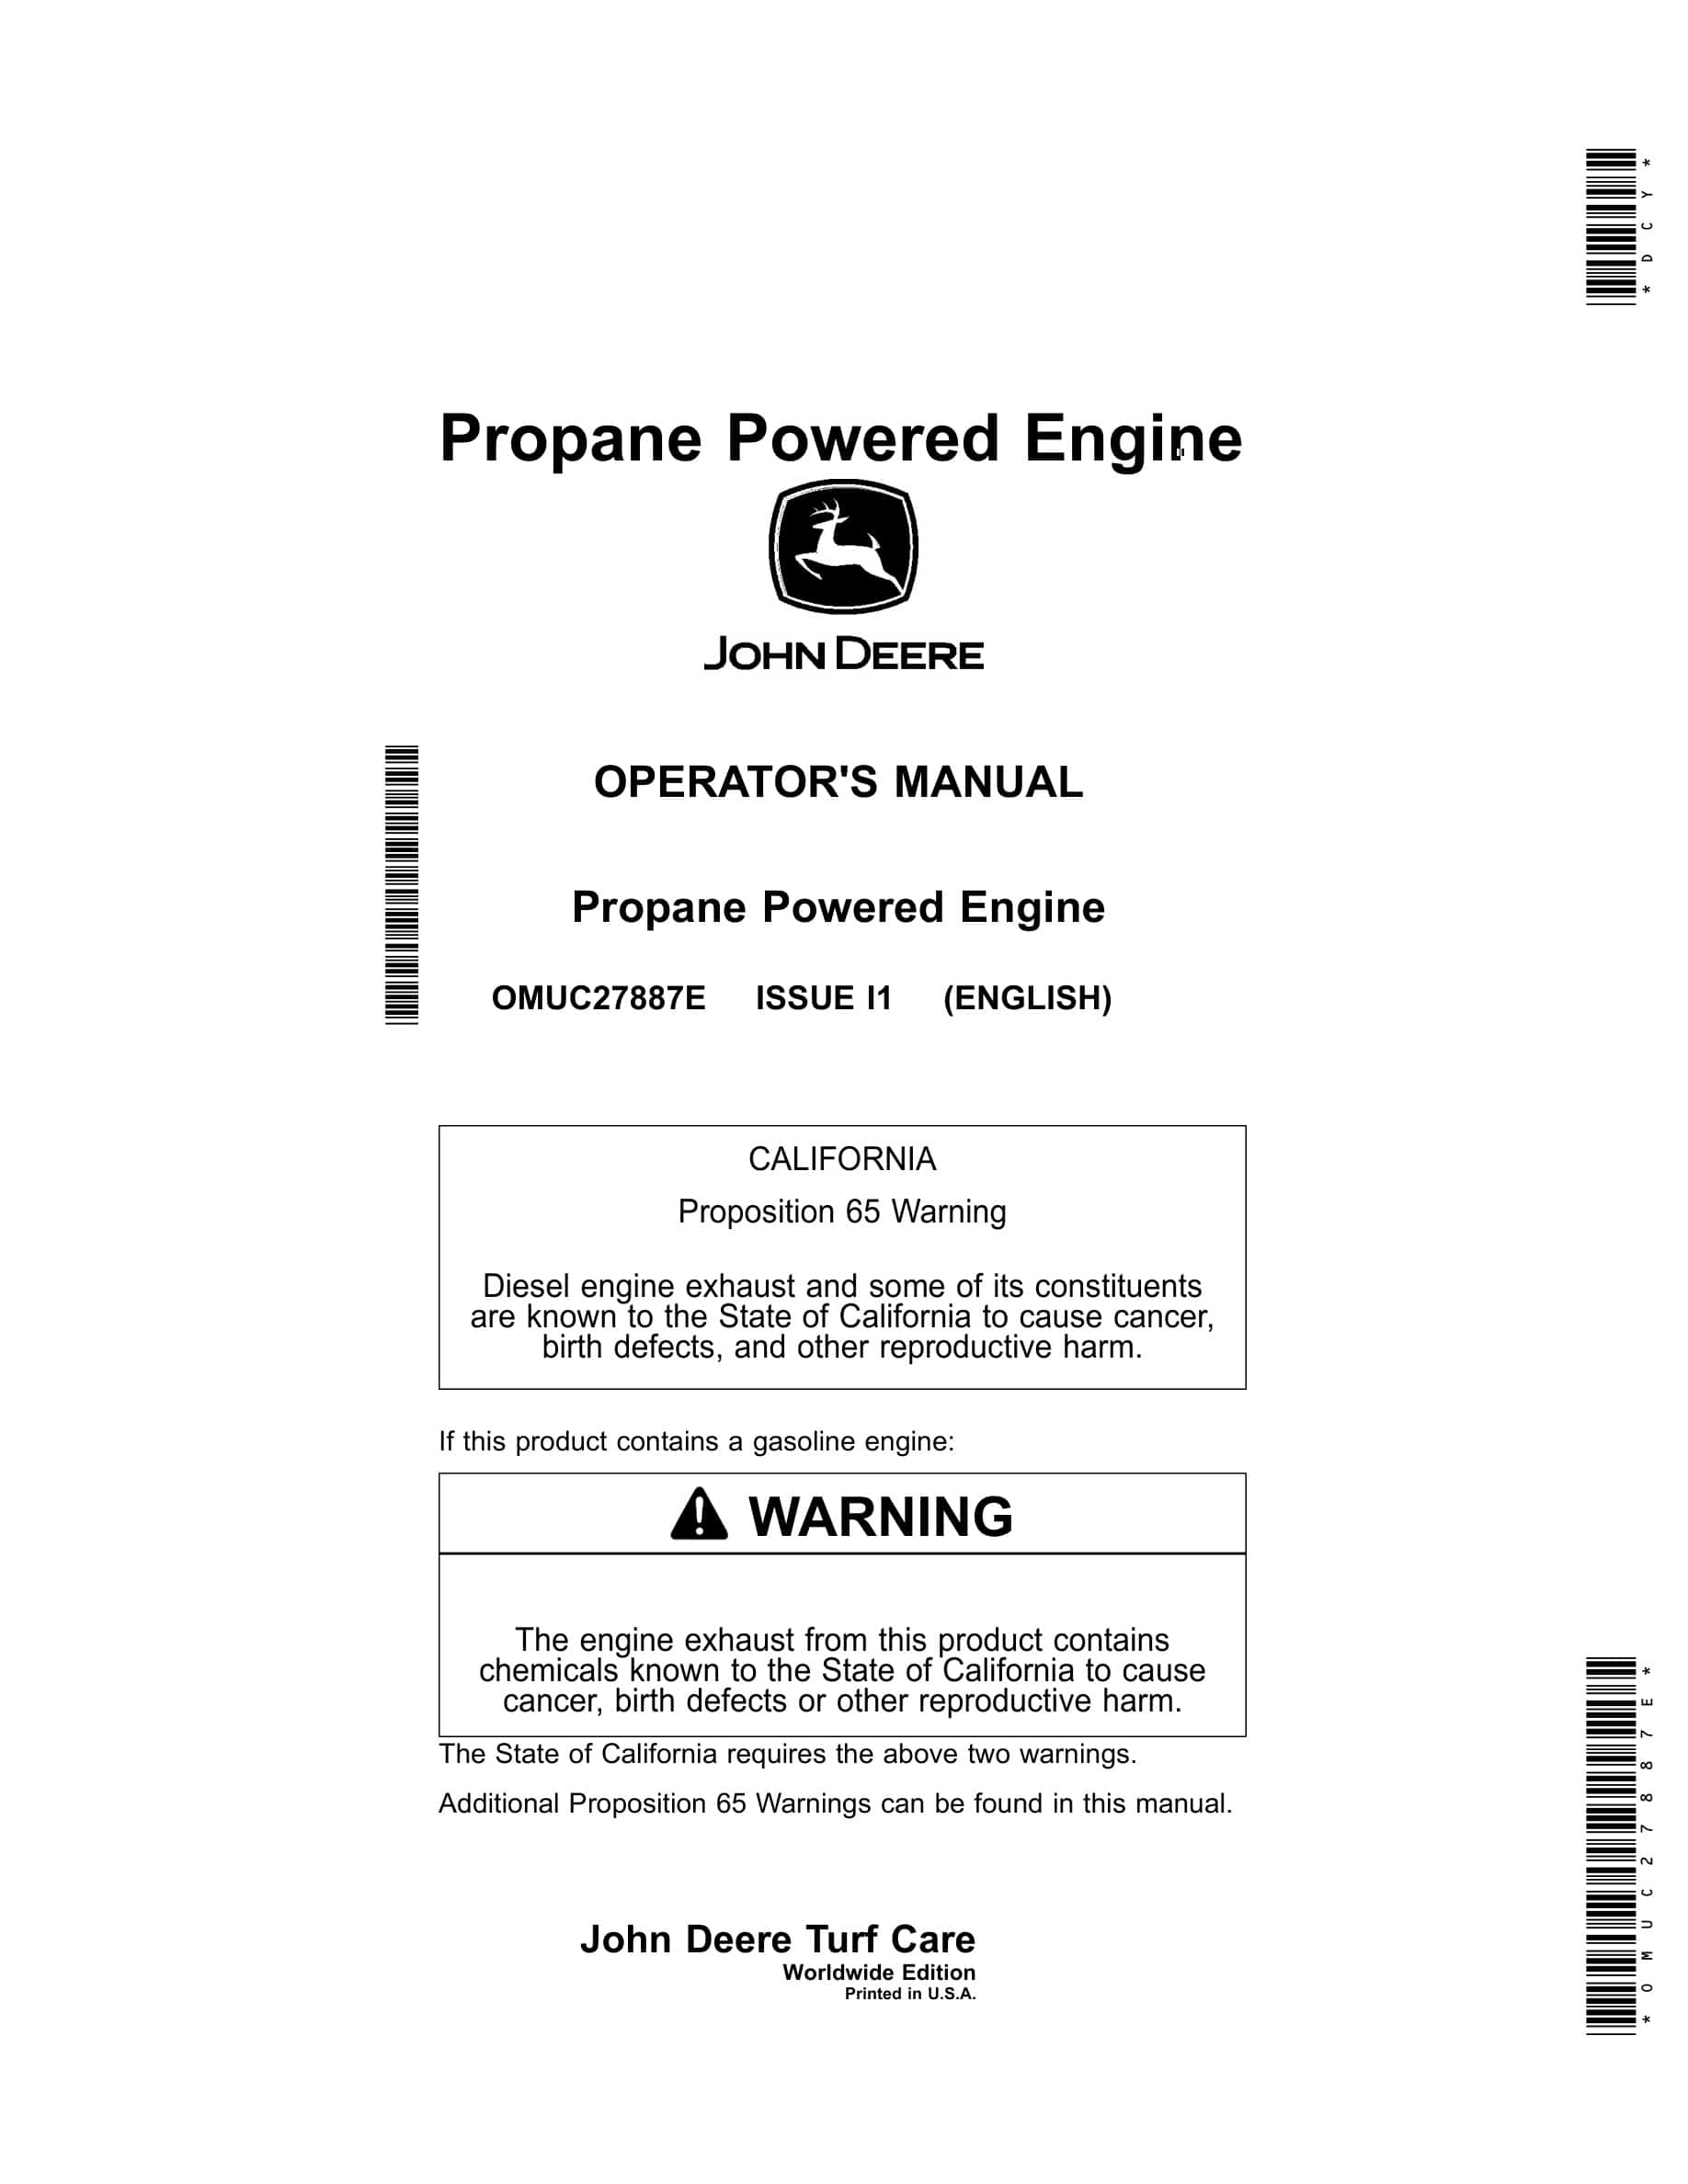 John Deere PowerTech Propane Powered Engine Operator Manual OMUC27887E-1